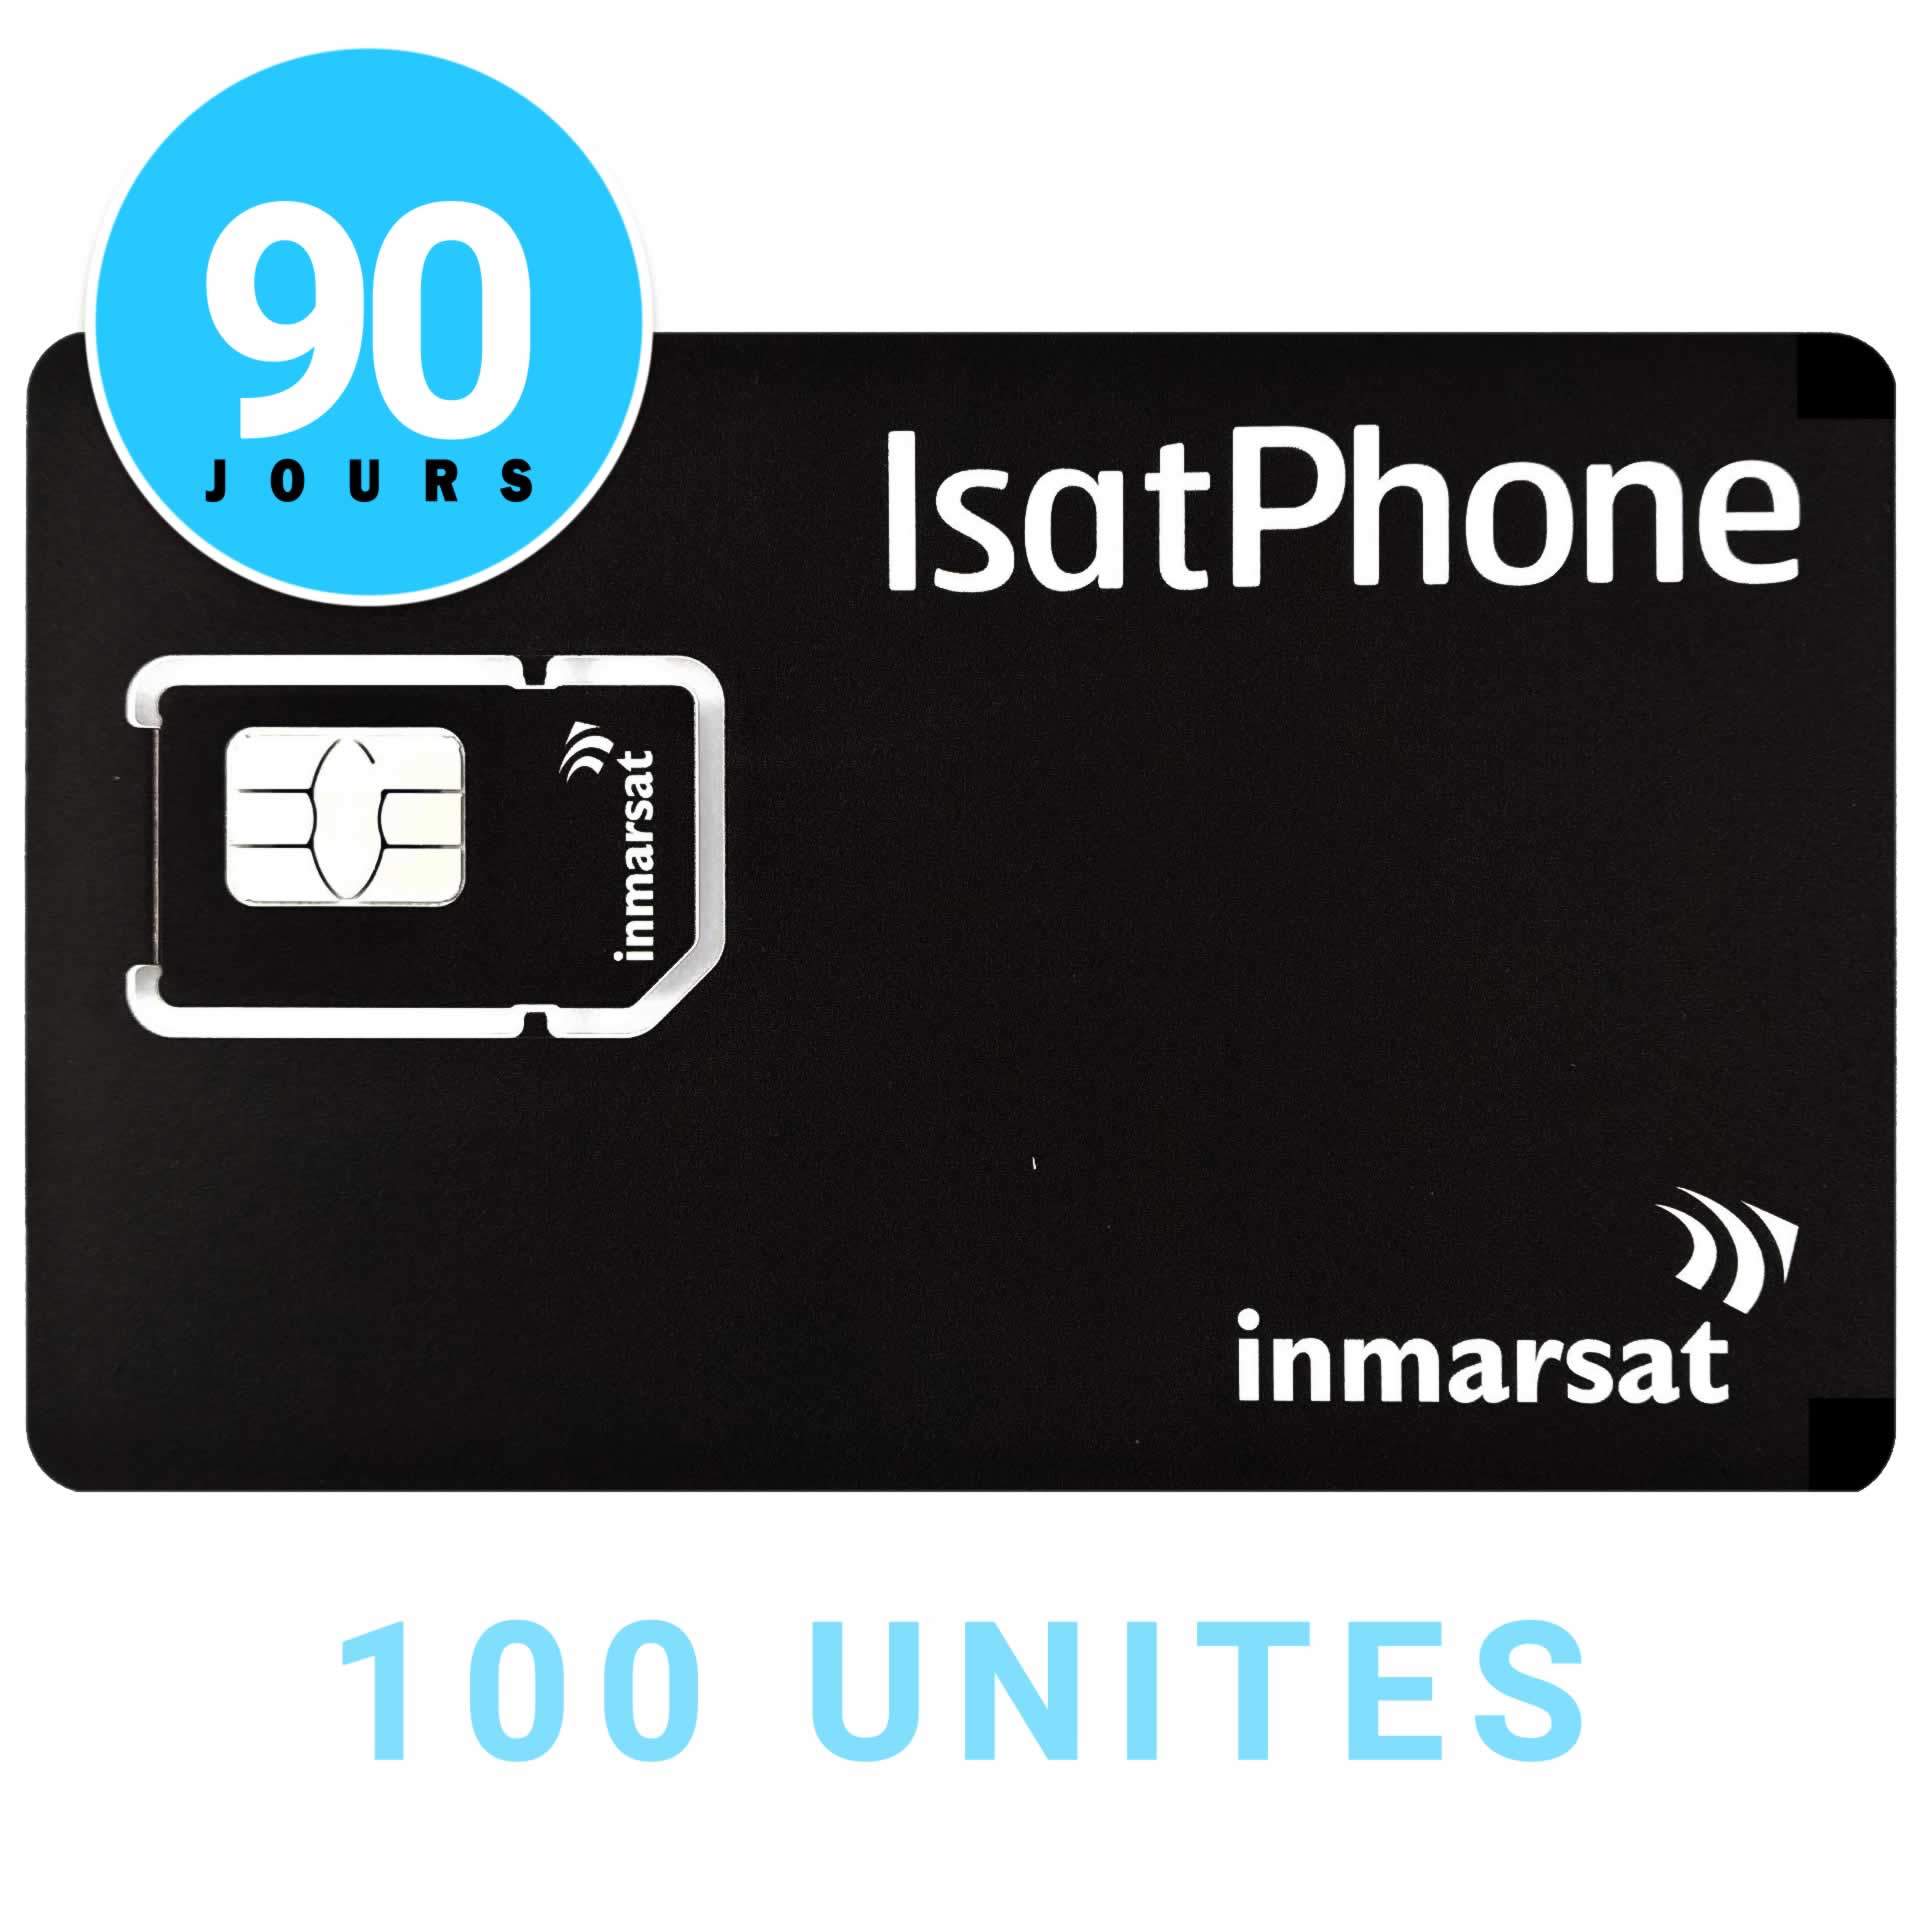 Carta prepagata ricaricabile INMARSAT ISATPHONE - 100 UNITA' - 90 giorni